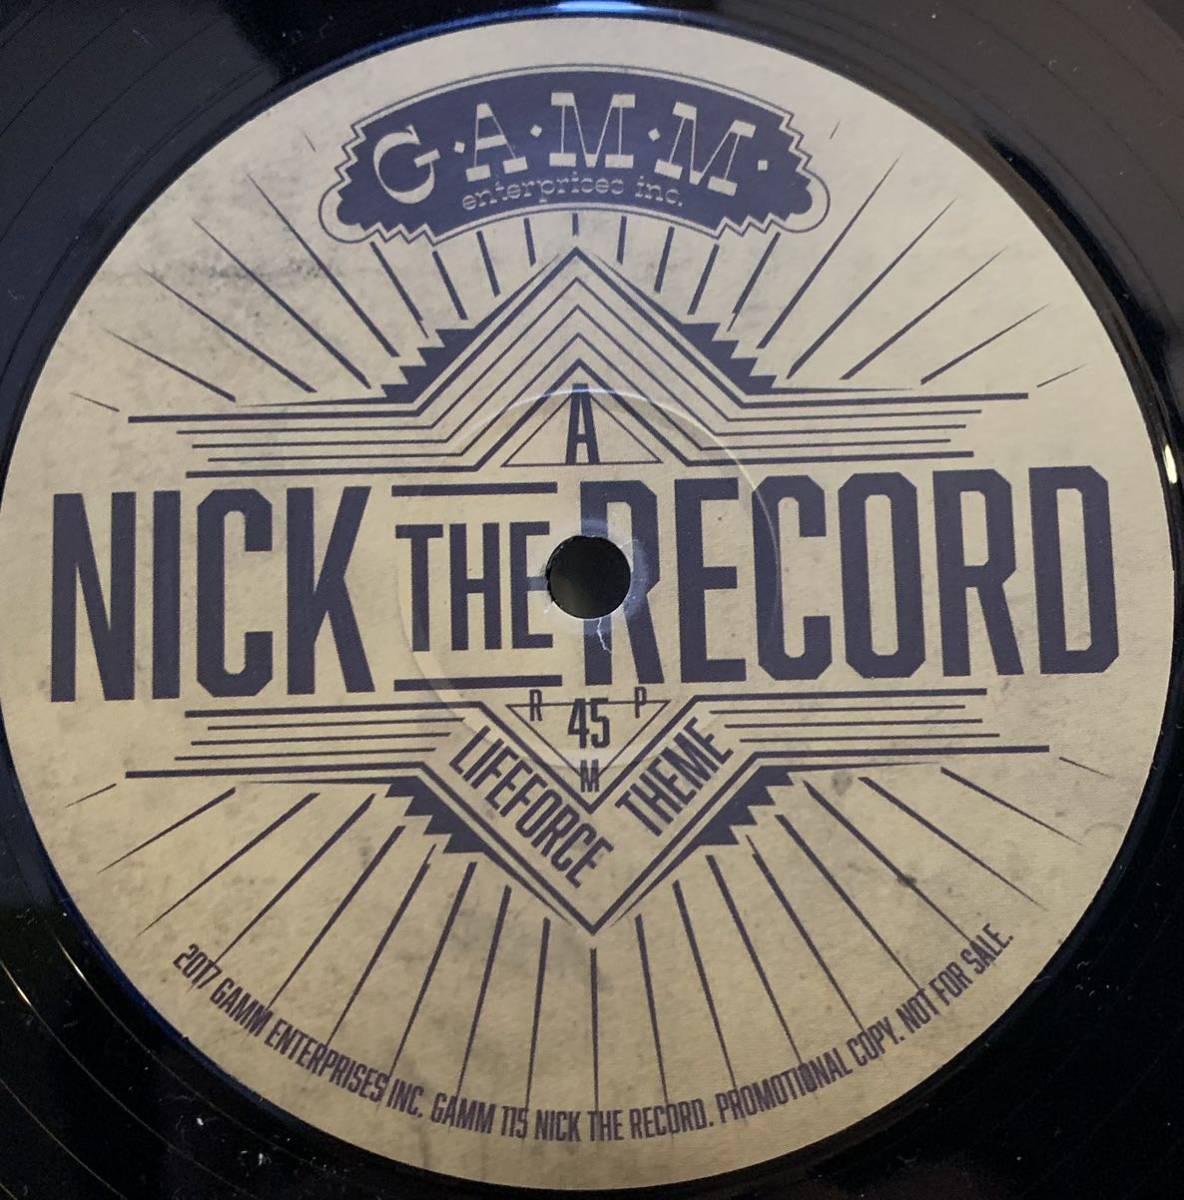 Nick The Record - Lifeforce Theme /G.A.M.M. _画像1